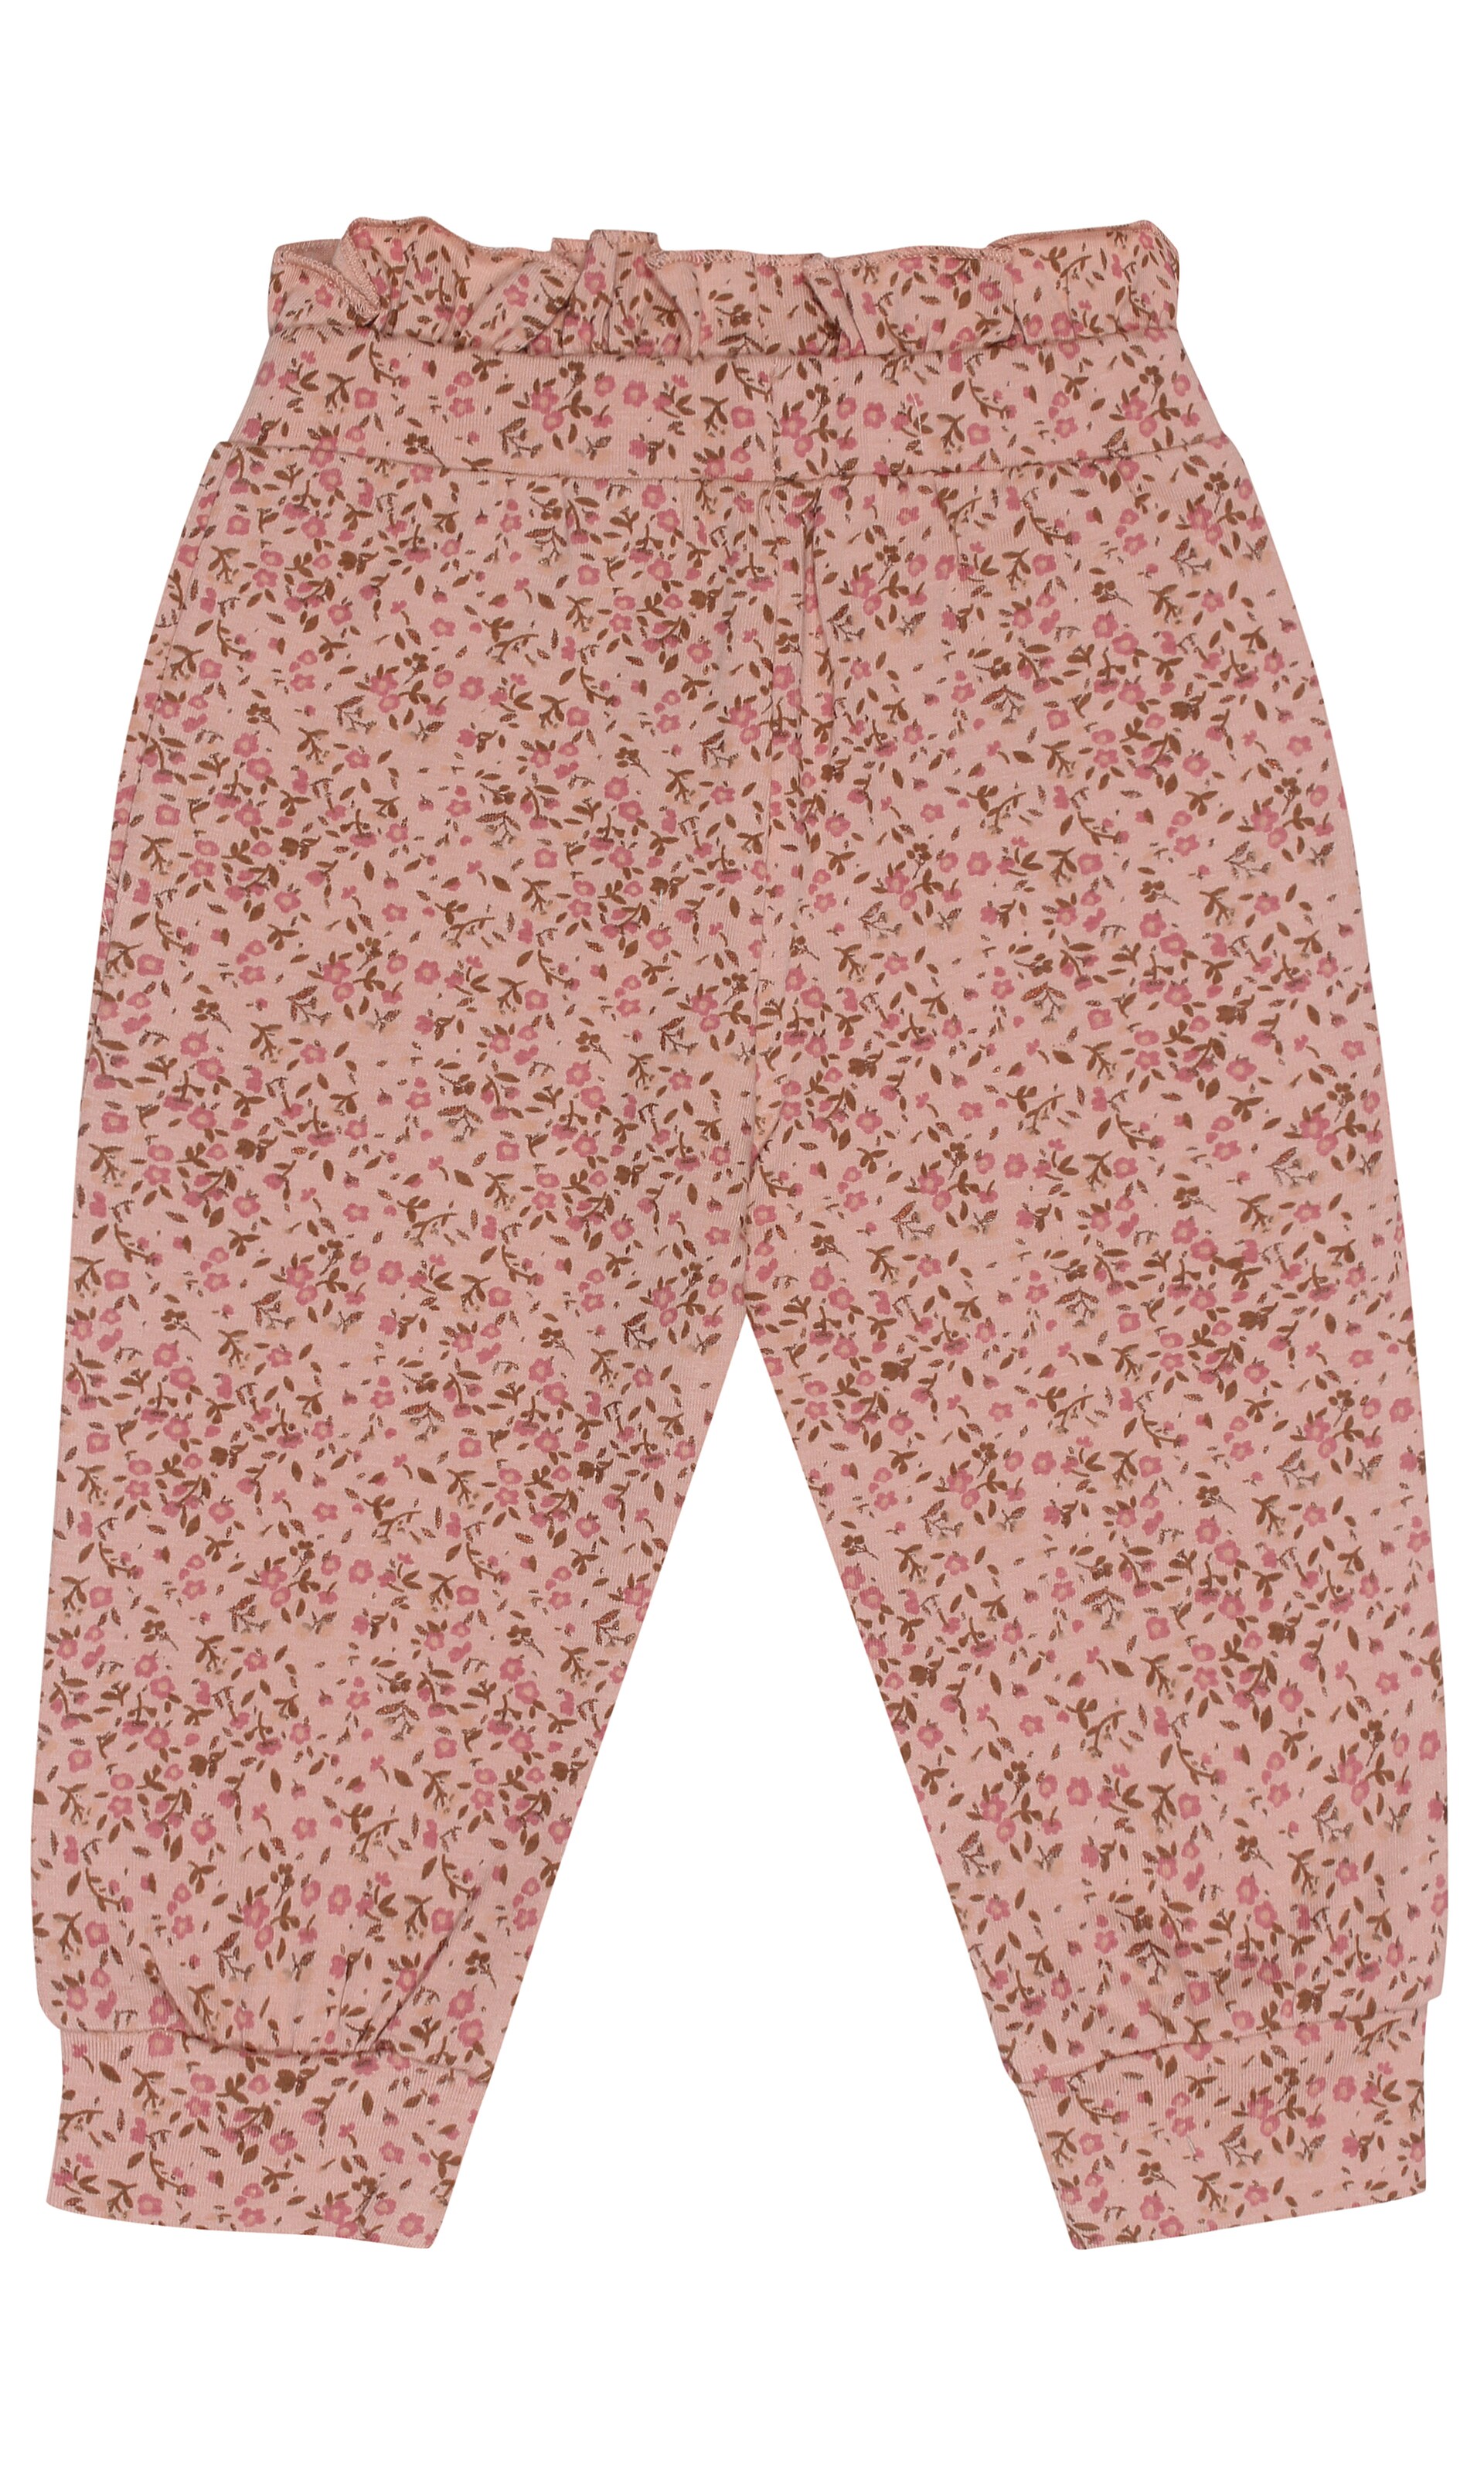 Kinder Bekleidung Kids Up Hose 'Vanilja' in Pink, Rosa - SU09454